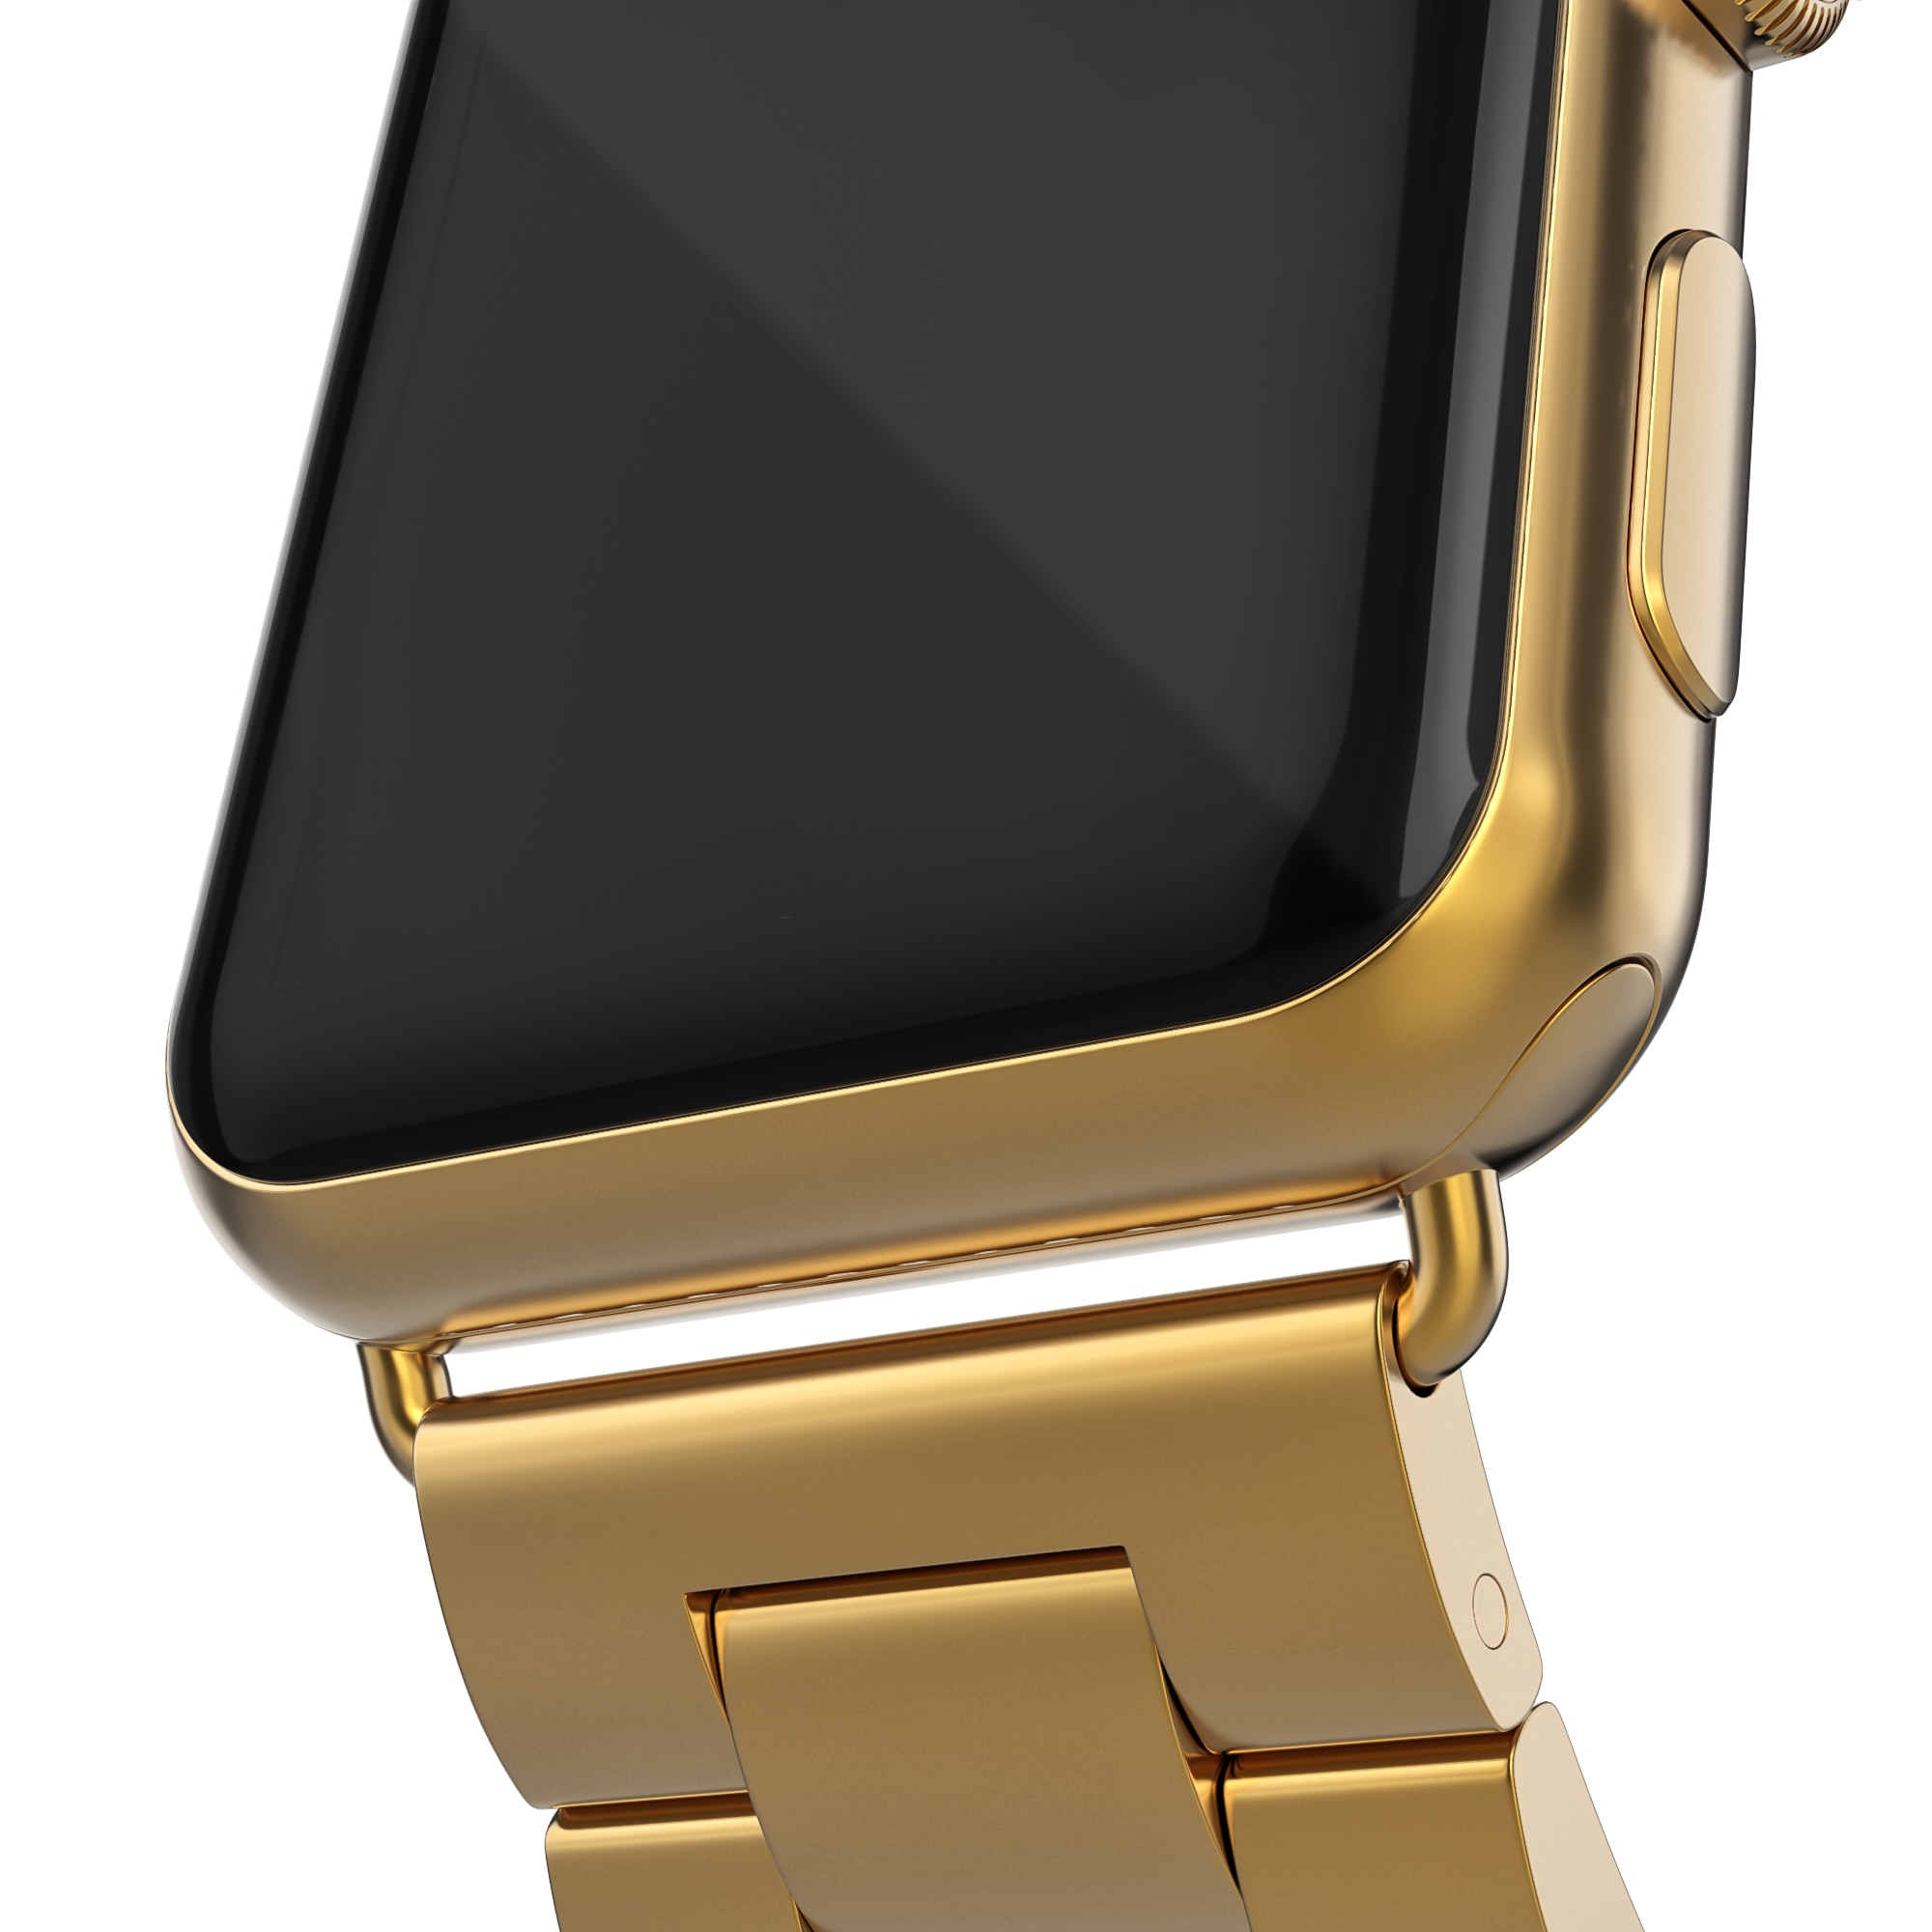 Metalarmbånd Apple Watch 38mm guld